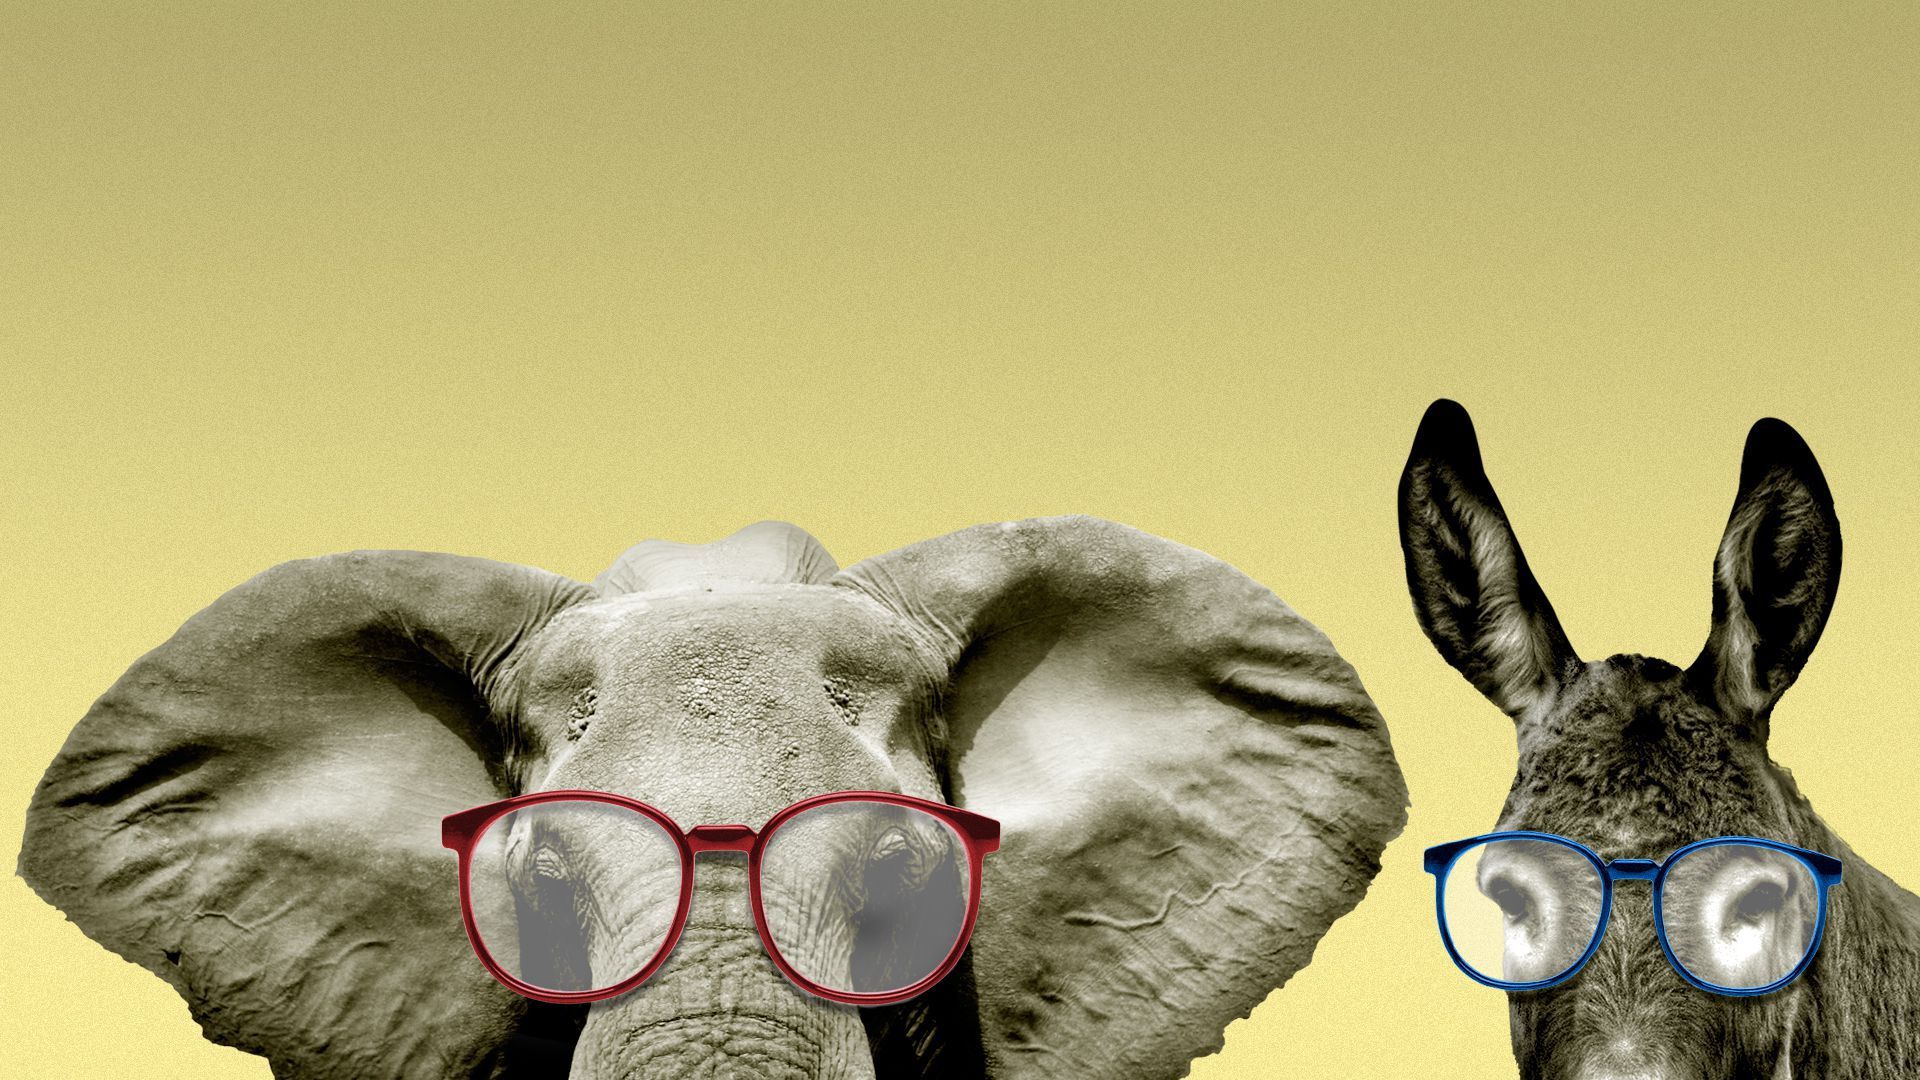 Illustration of an elephant and donkey wearing glasses.